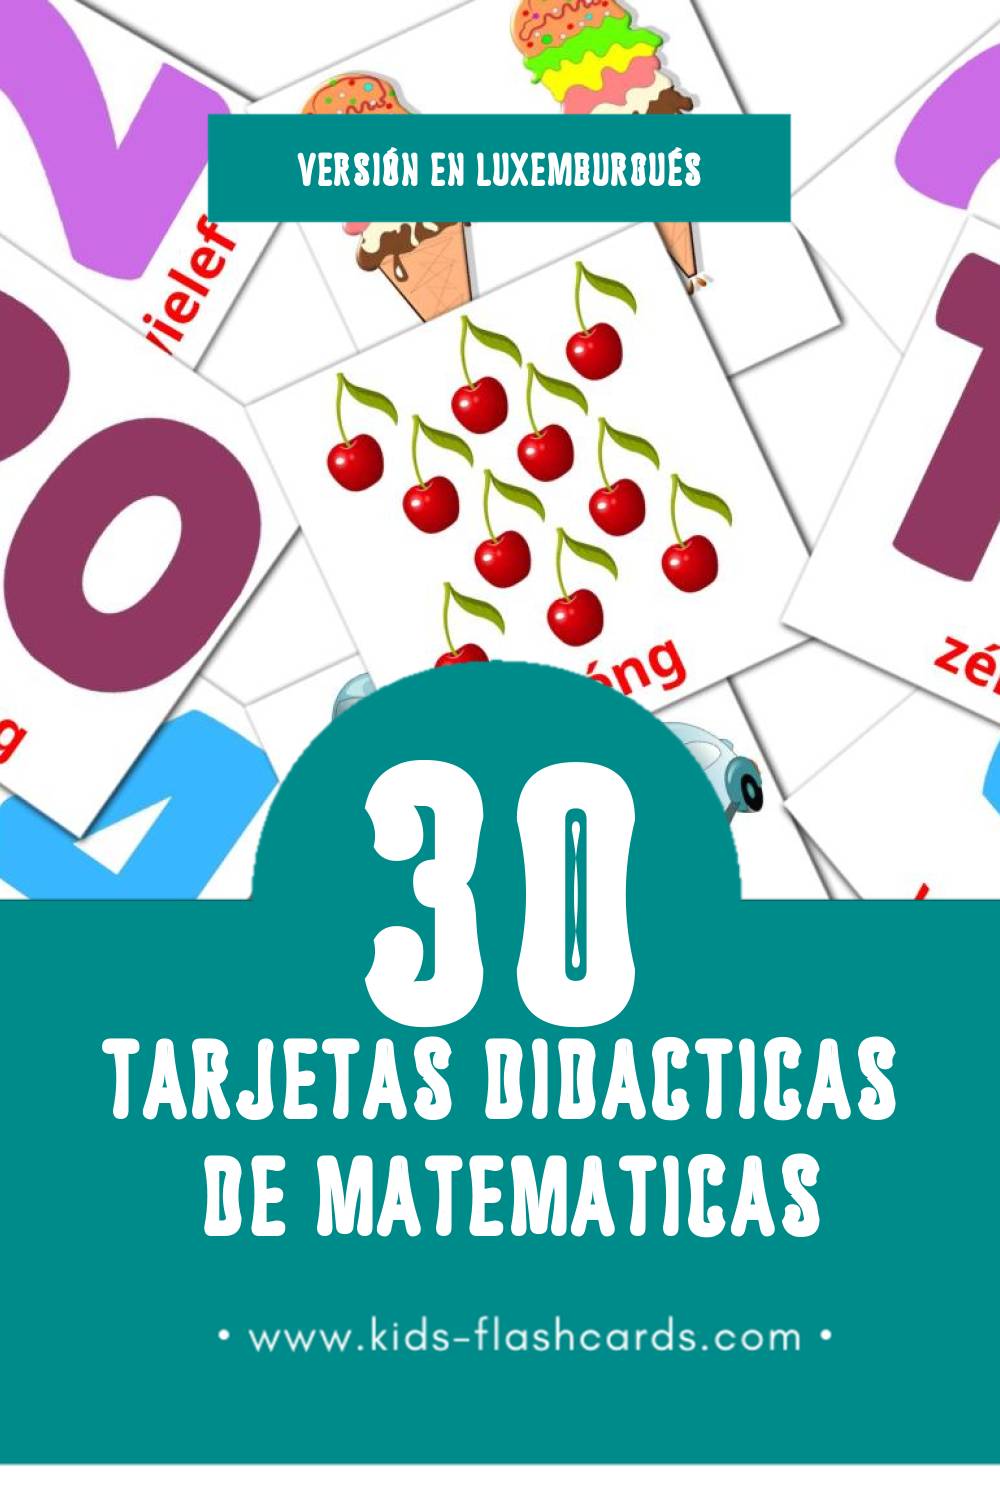 Tarjetas visuales de Mathematik para niños pequeños (30 tarjetas en Luxemburgués)